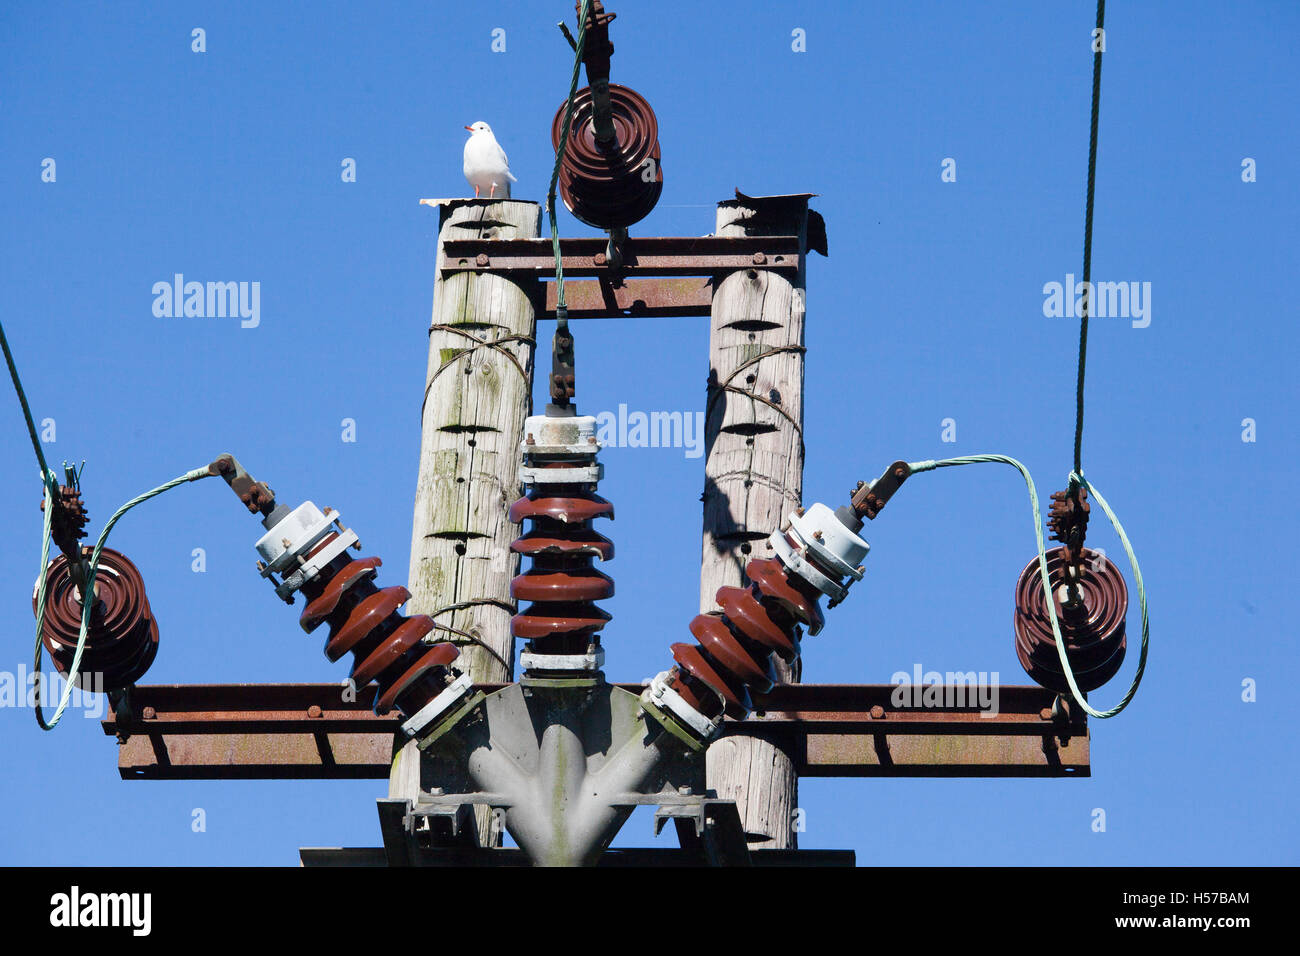 wooden electricity pylon Stock Photo